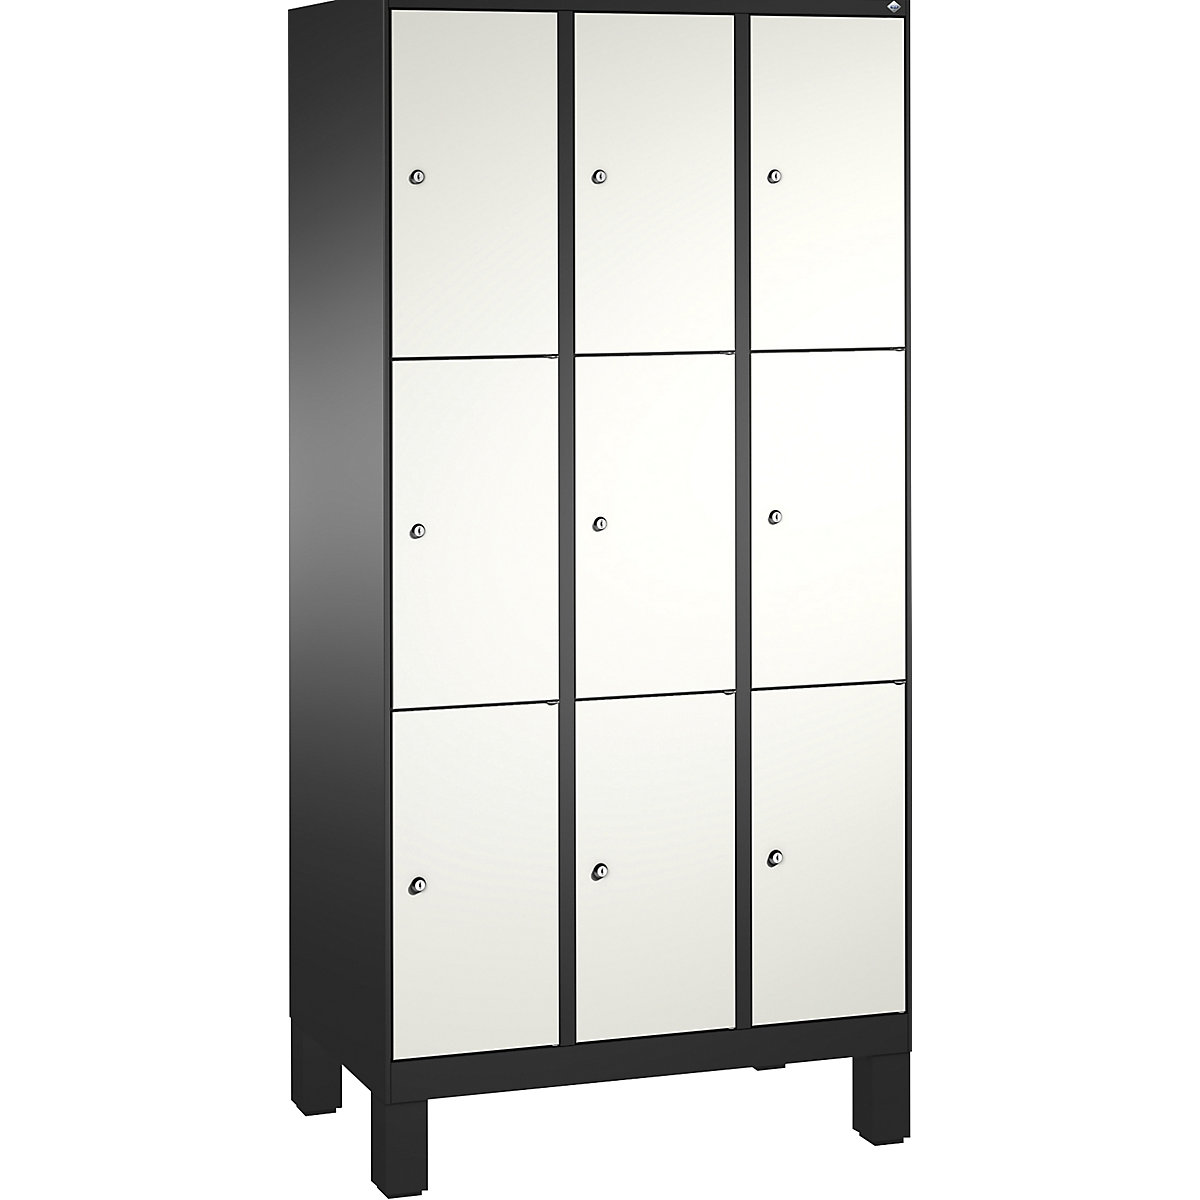 EVOLO locker unit, with feet – C+P, 3 compartments, 3 shelf compartments each, compartment width 300 mm, black grey / traffic white-9